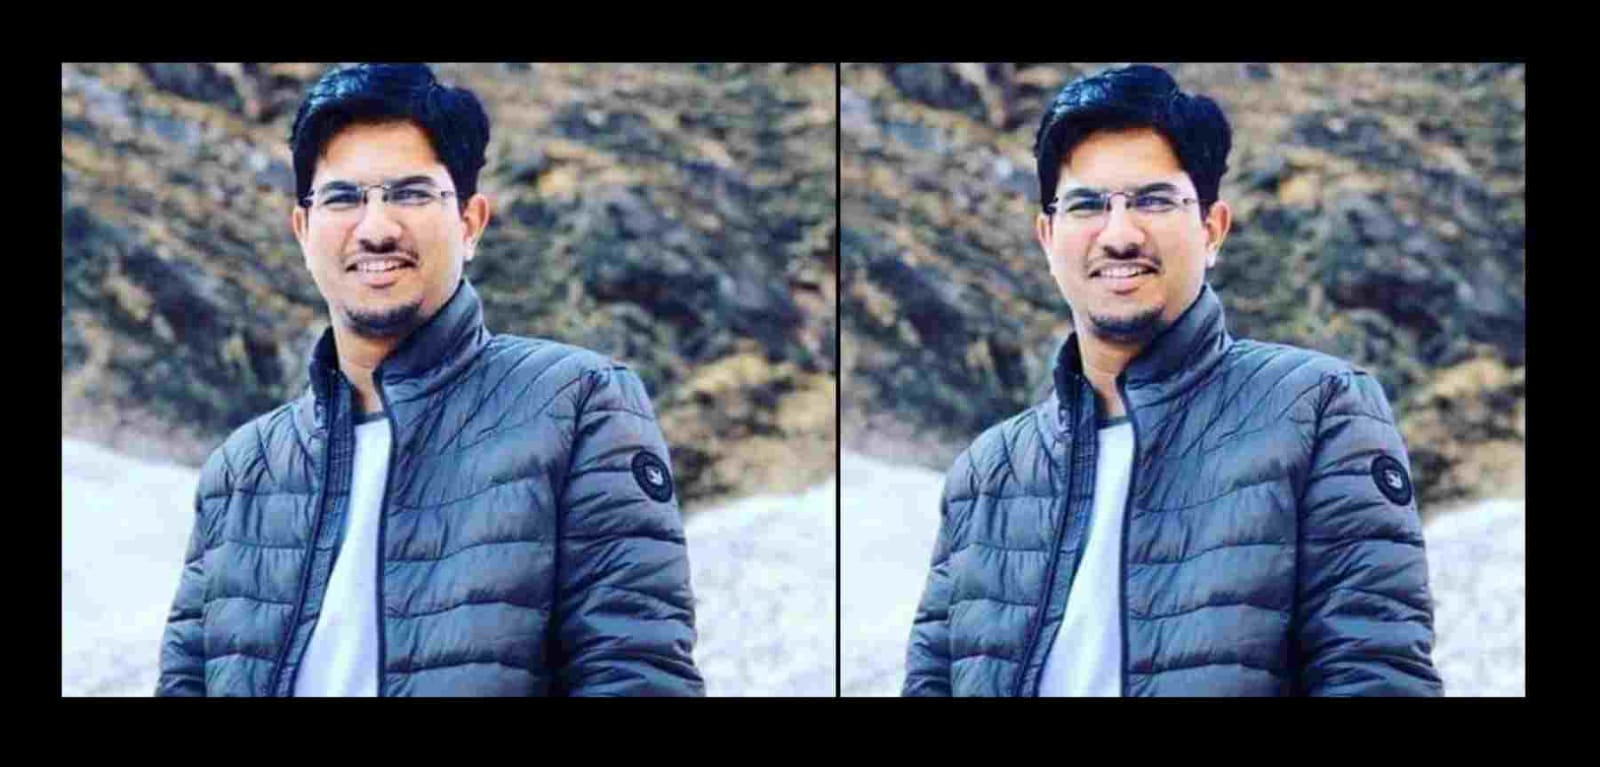 Uttarakhand: srinagar subdistrict hospital Eye specialist Dr Bhaskar Painuly dies of heart attack at the age of 32